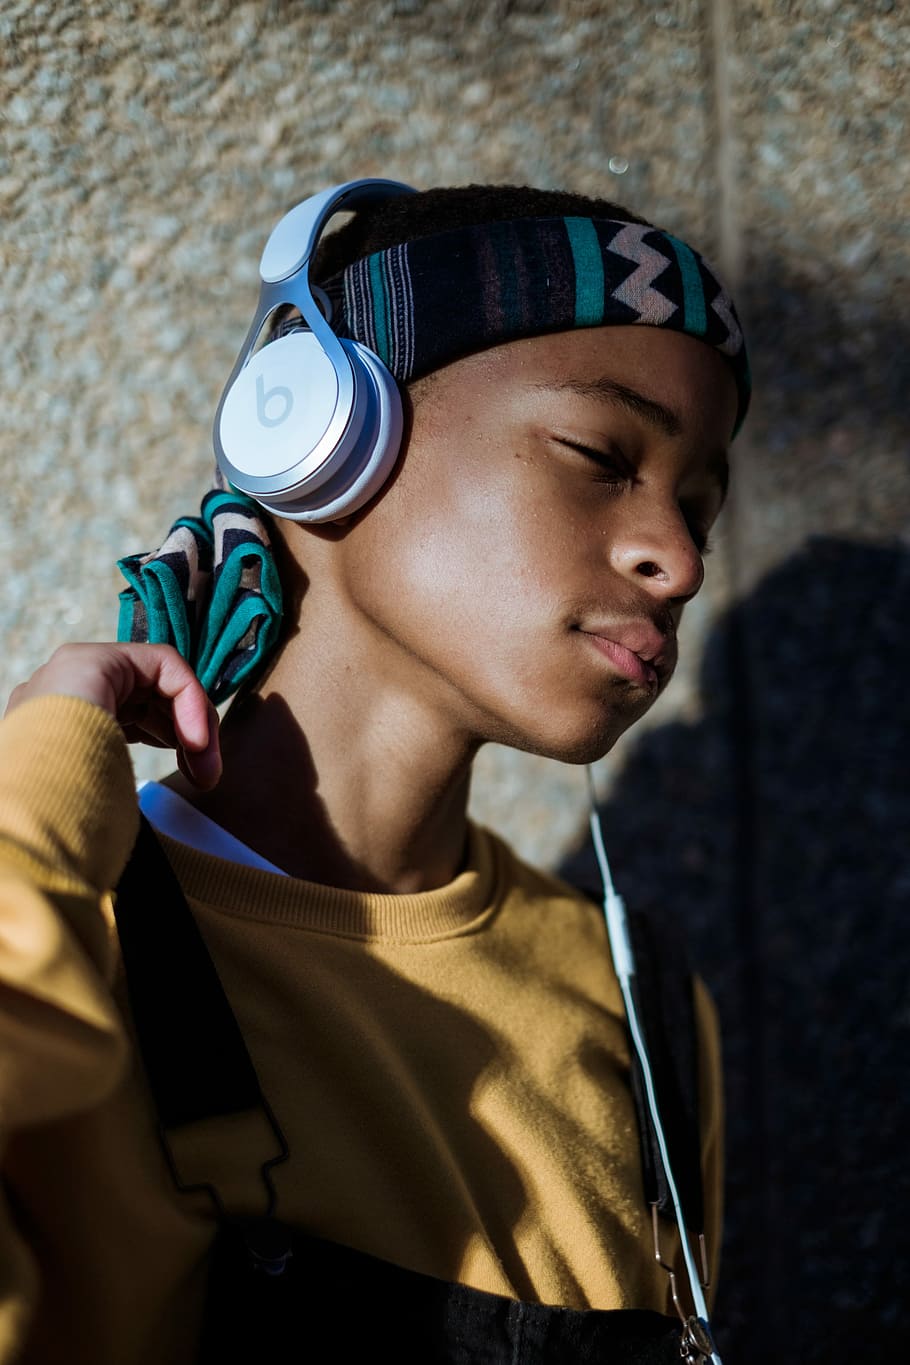 HD wallpaper: boy listening headphones, boy wearing yellow sweater listening to music